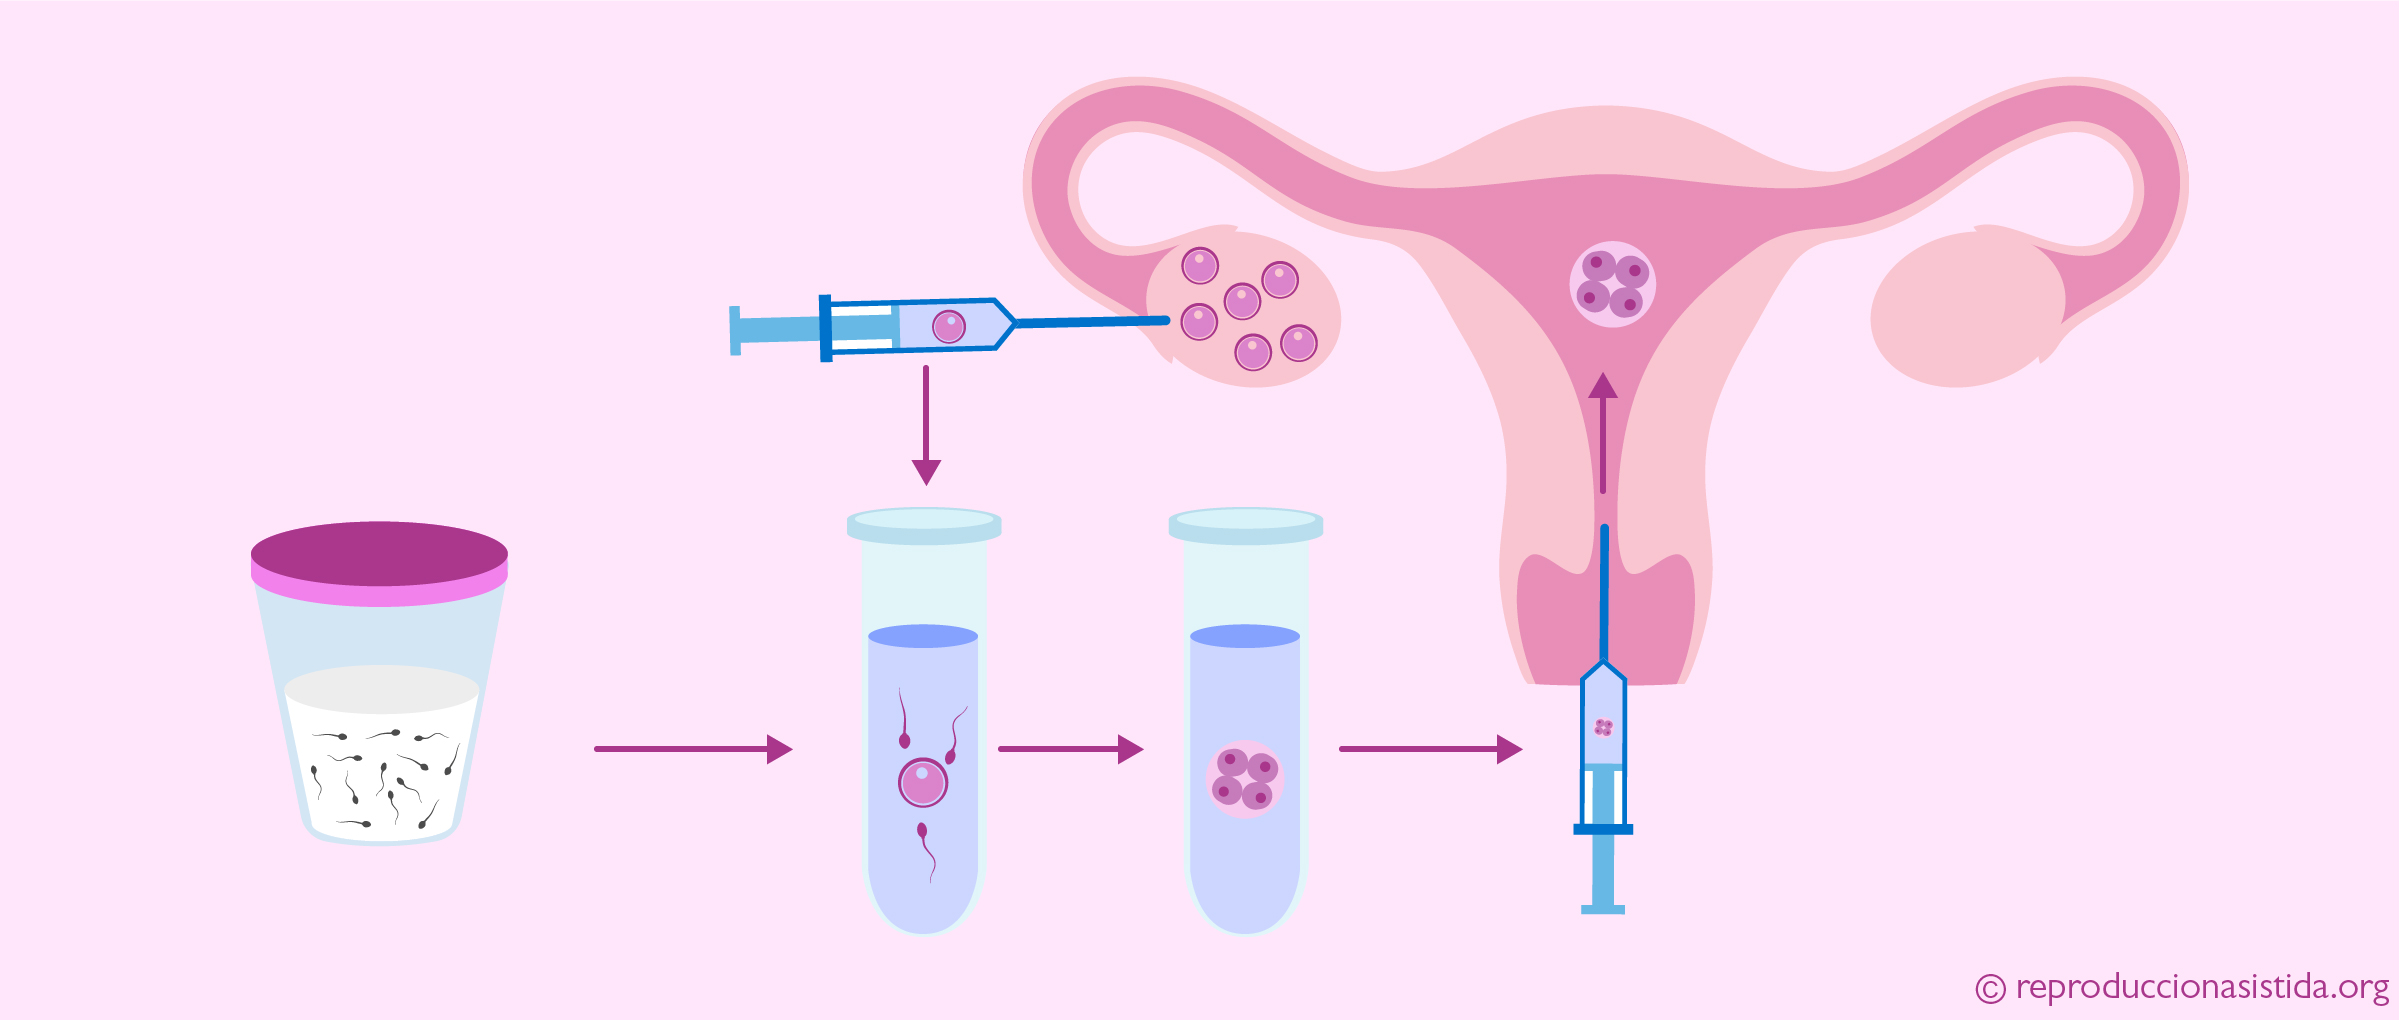 Fecundación In vitro